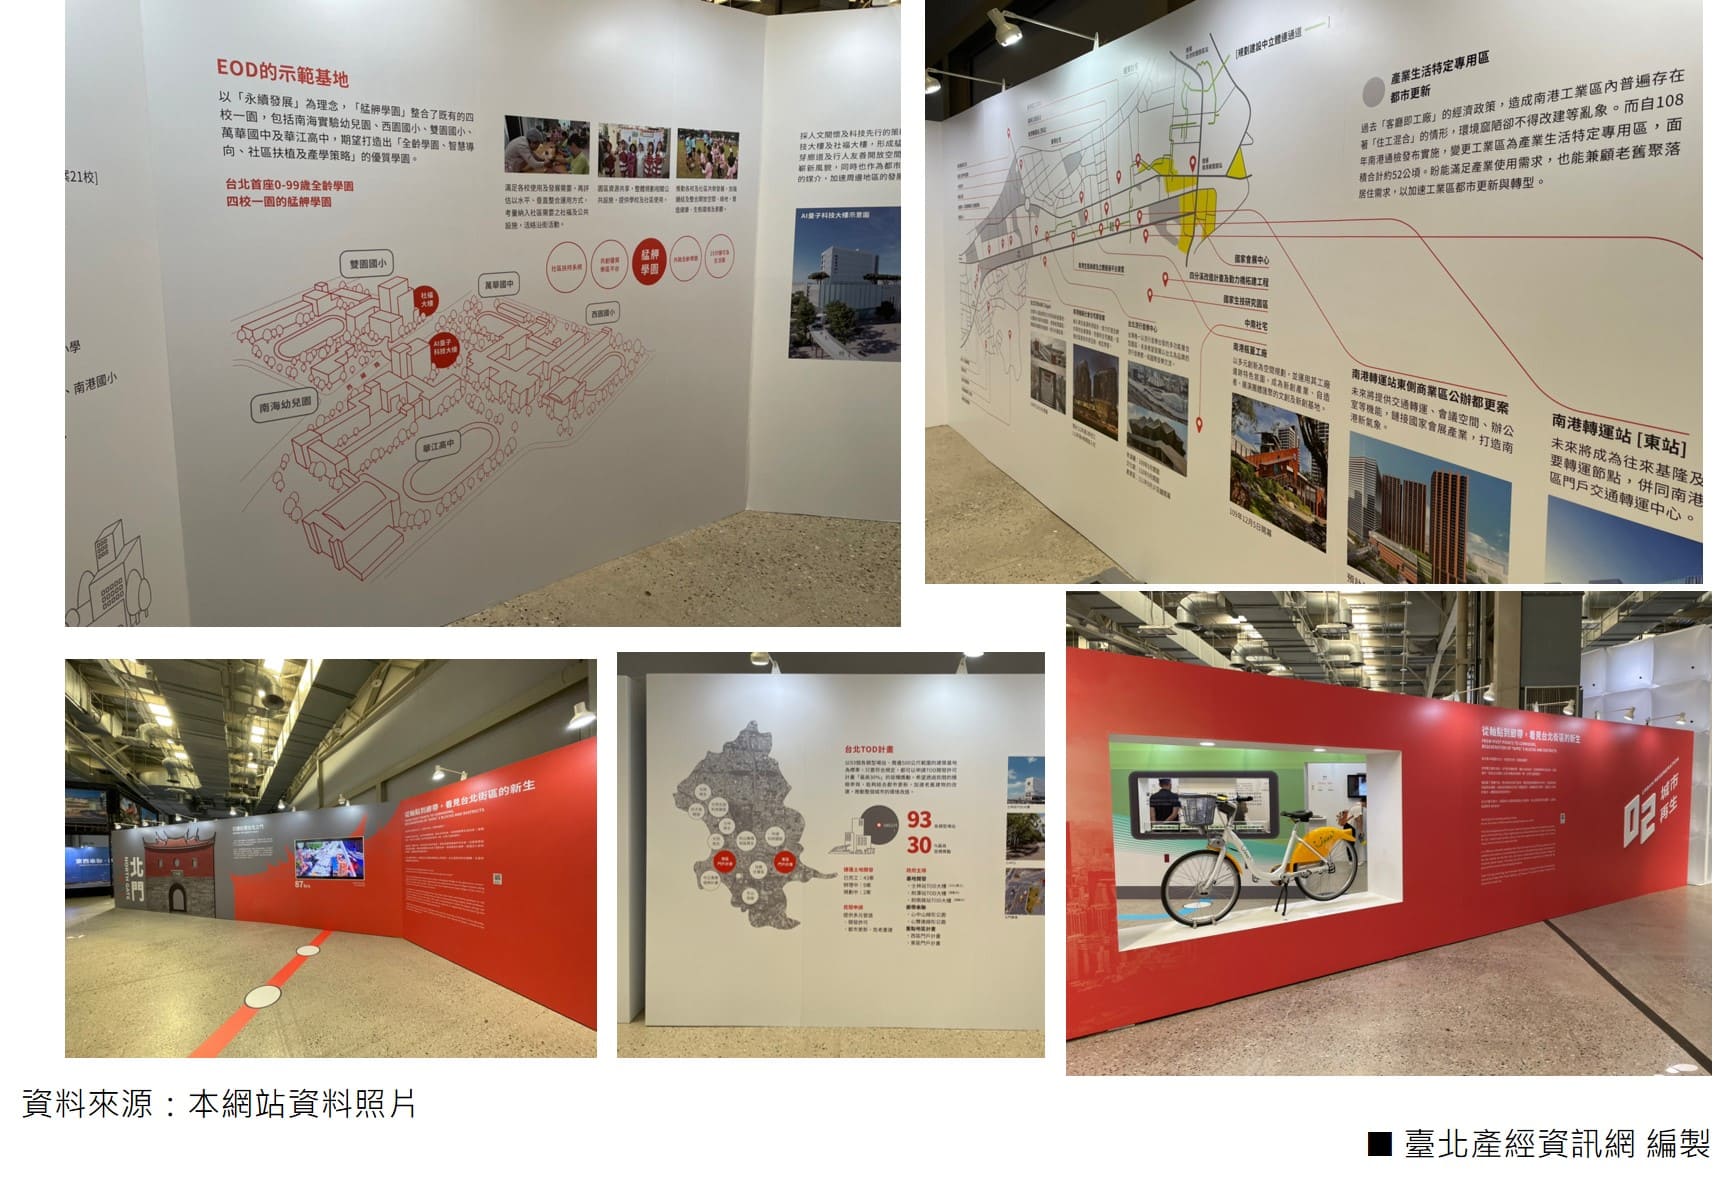 Display of achievements in the “Urban Regeneration” exhibition zone